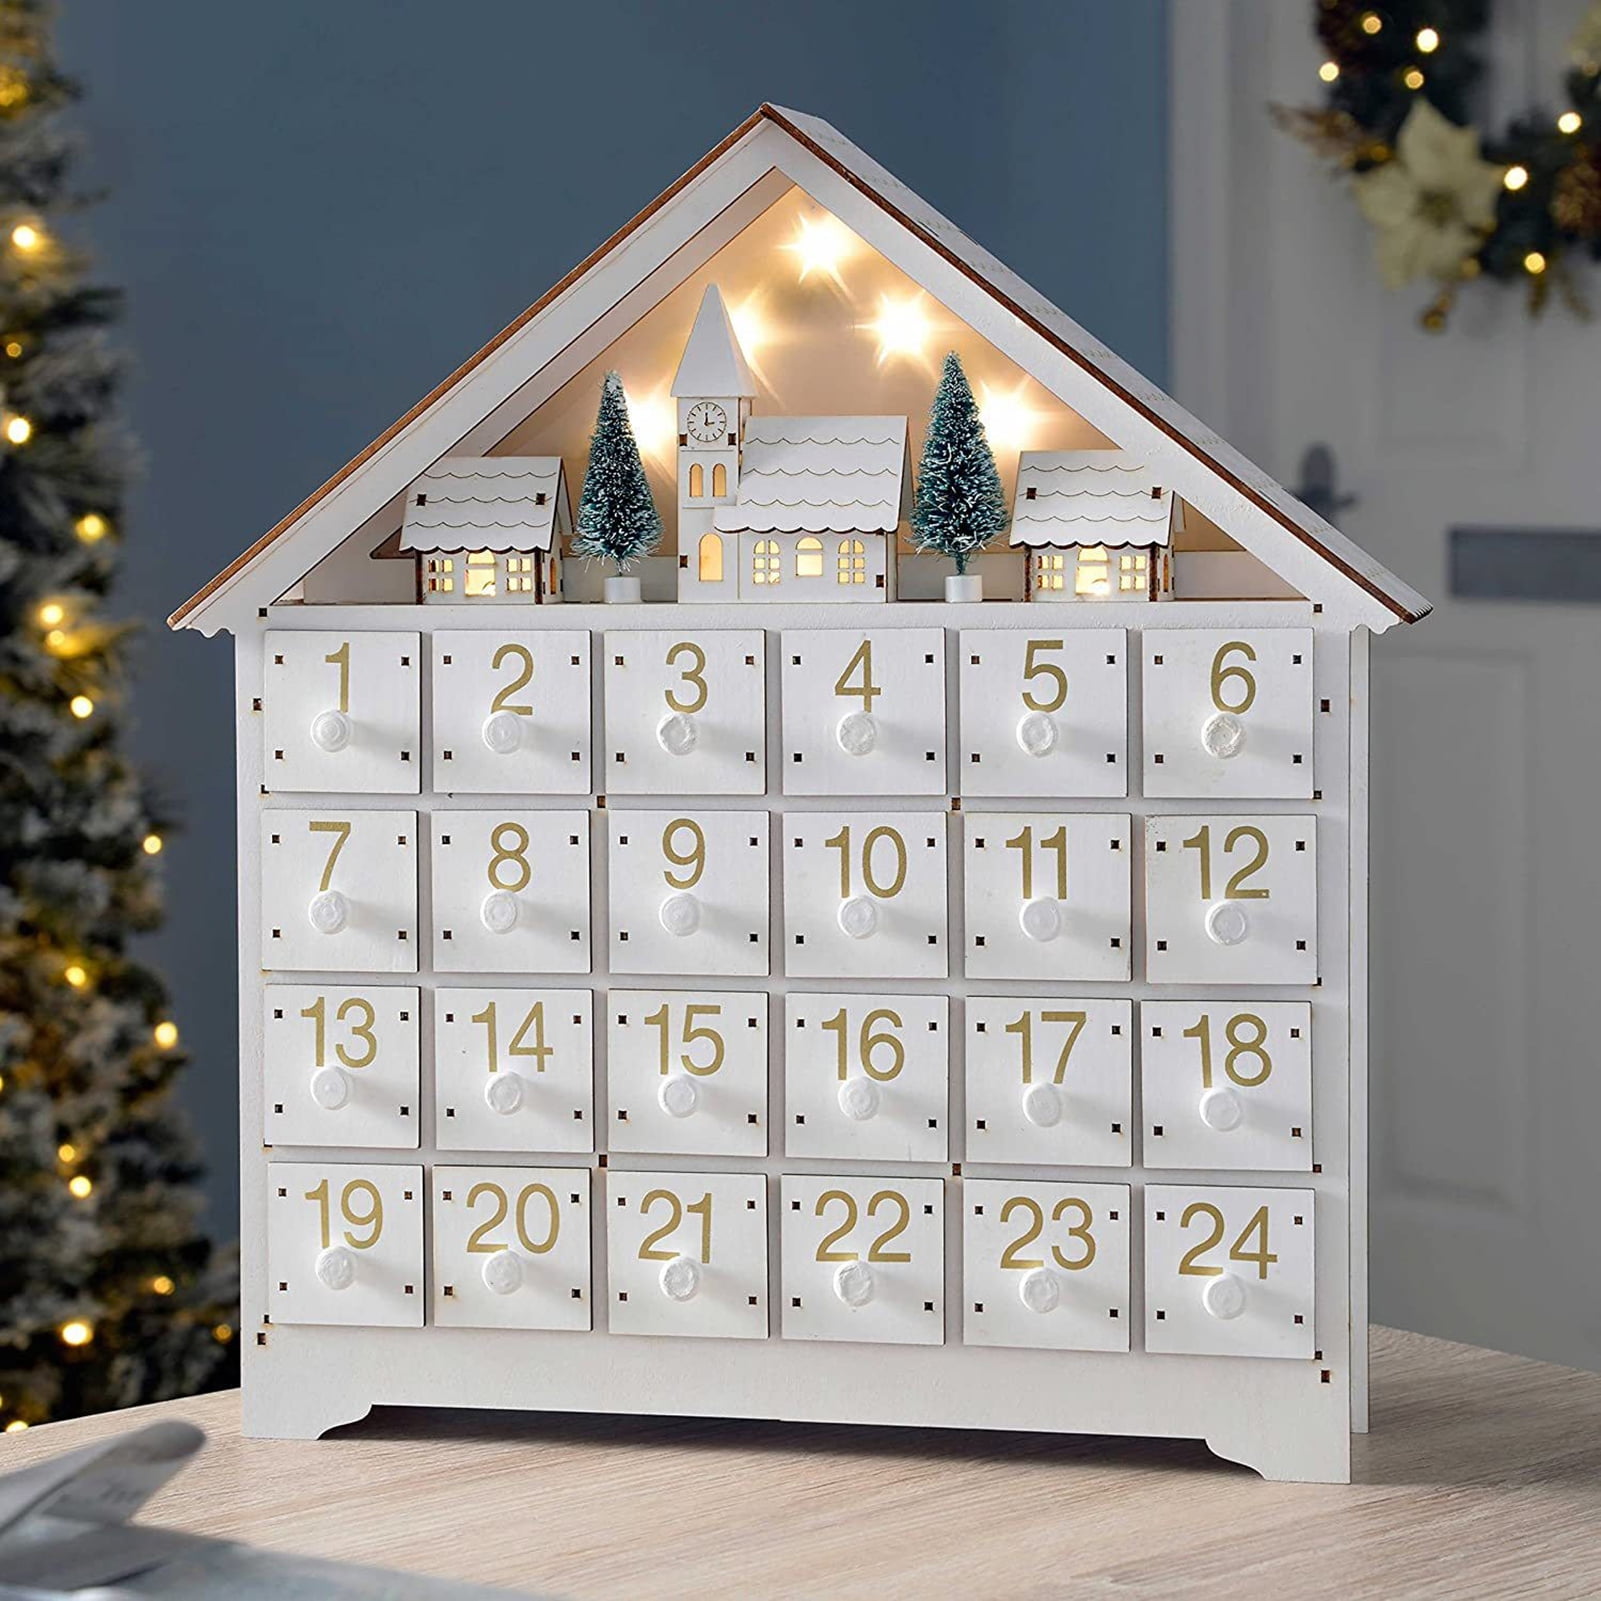 GROFRY Christmas Advent Calendar Built-in LED Light Fadeless Gifts